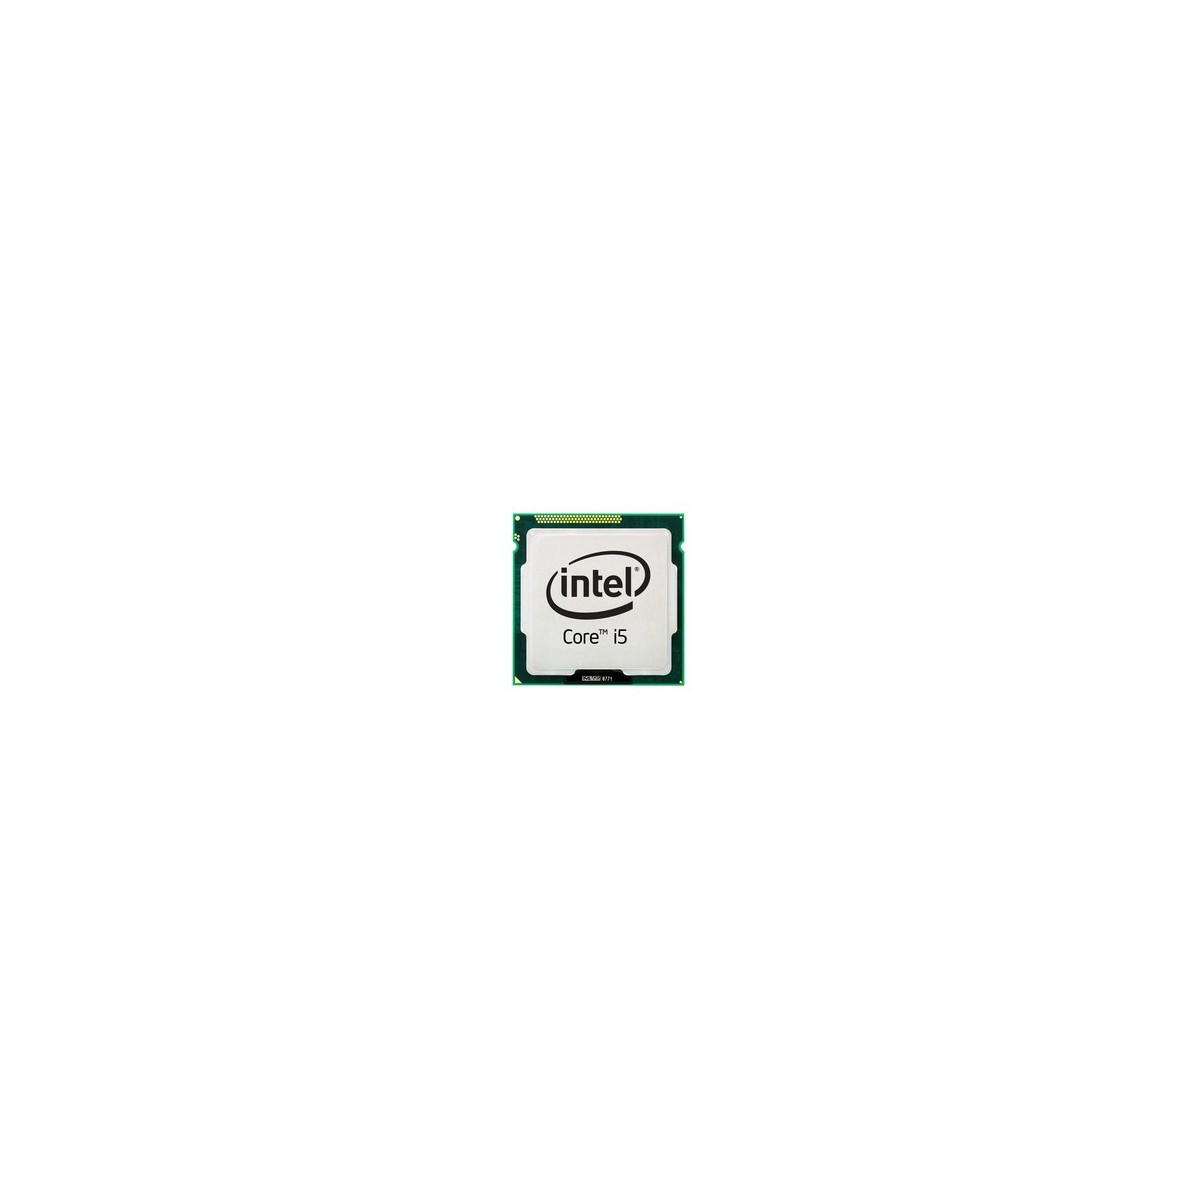 Intel Core i5-6400 Core i5 2.8 GHz - Skt 1151 Skylake - 35 W